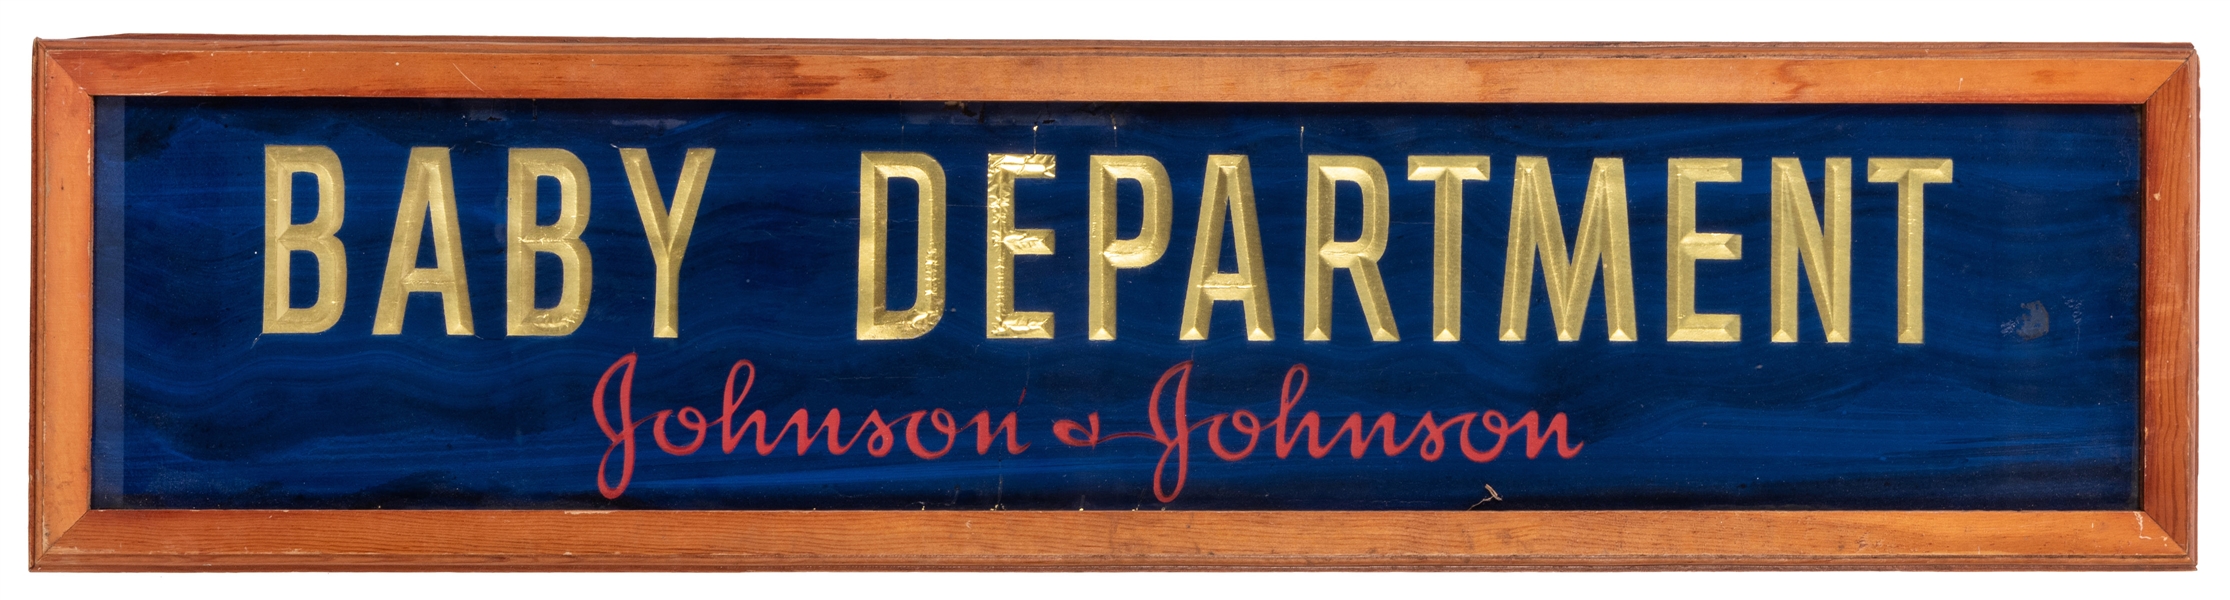 Johnson & Johnson Baby Department Sign.